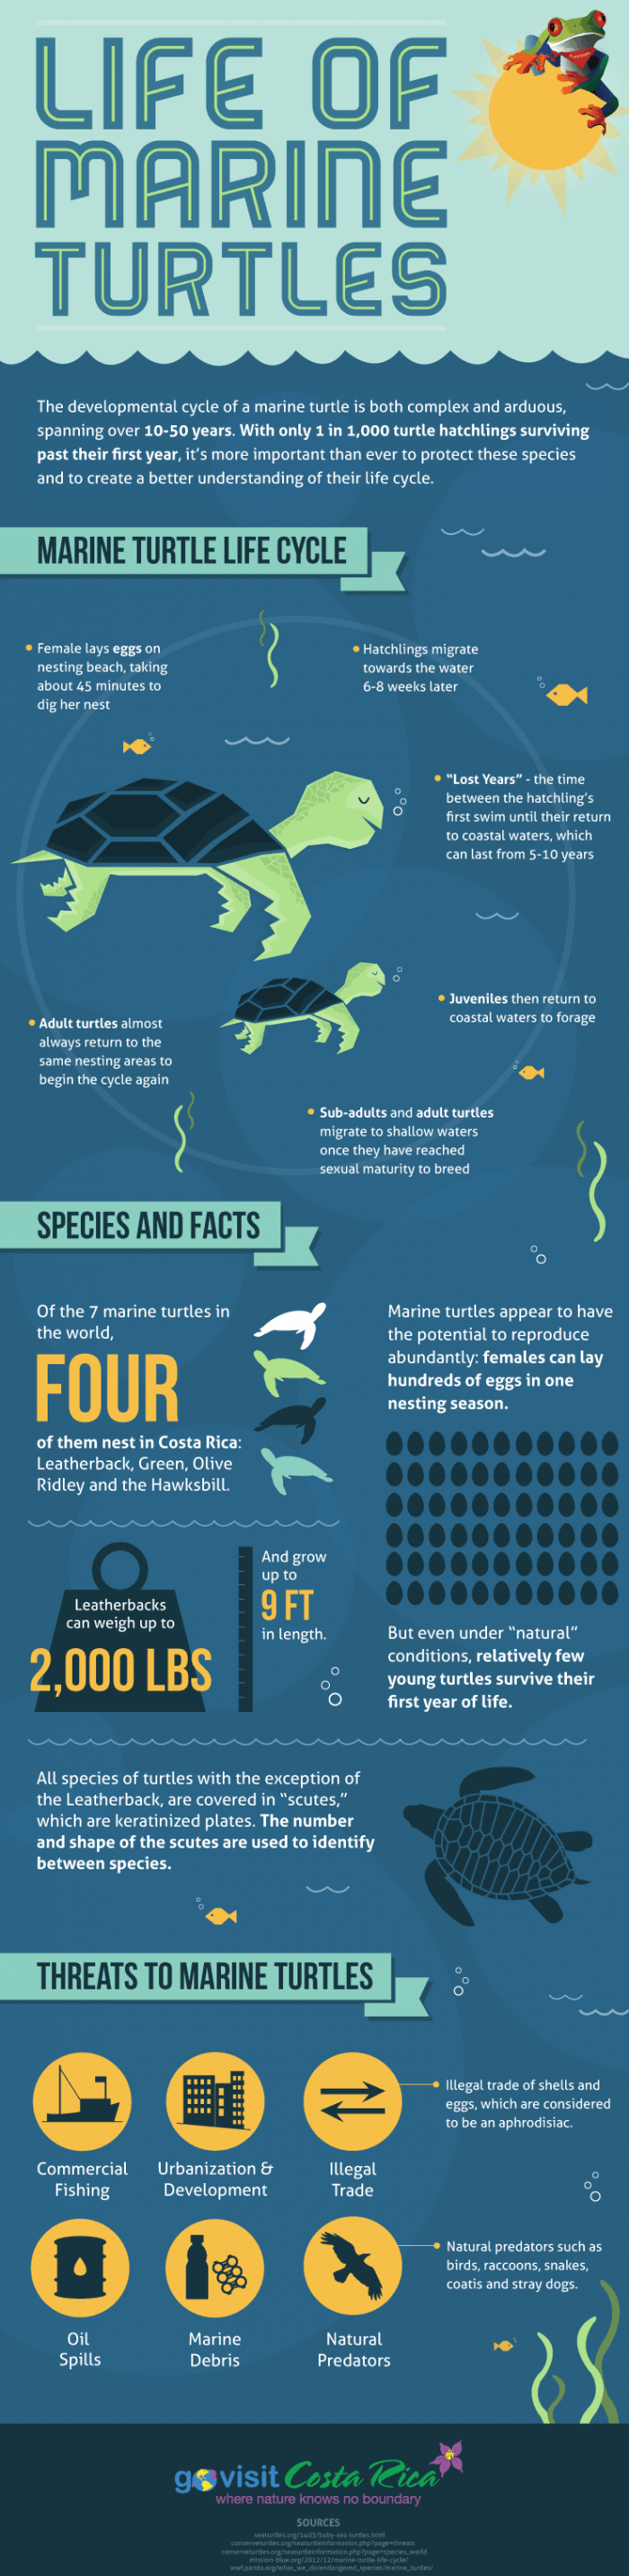 Life of marine turtle infographic